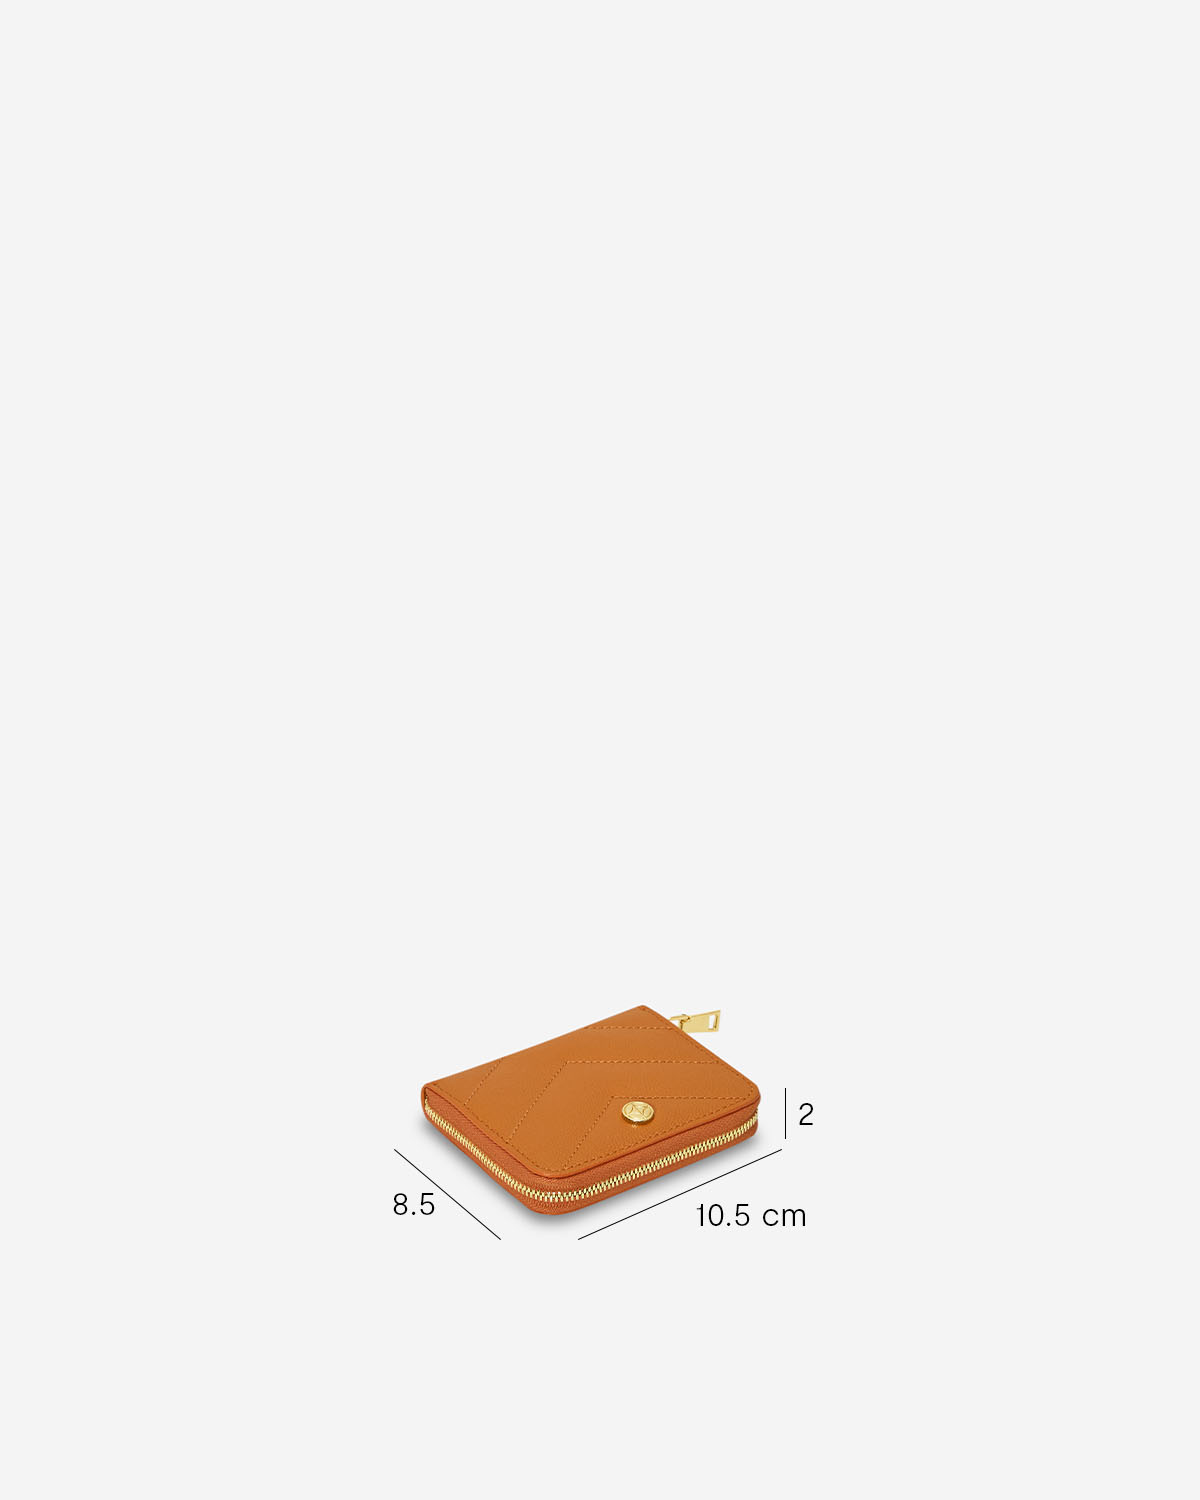 VERA CAVIAR Zipped Wallet in Orange H กระเป๋าสตางค์ซิปรอบ อยู่ทรงสวย ทำจากหนังแท้ลาย Caviar สี Orange H